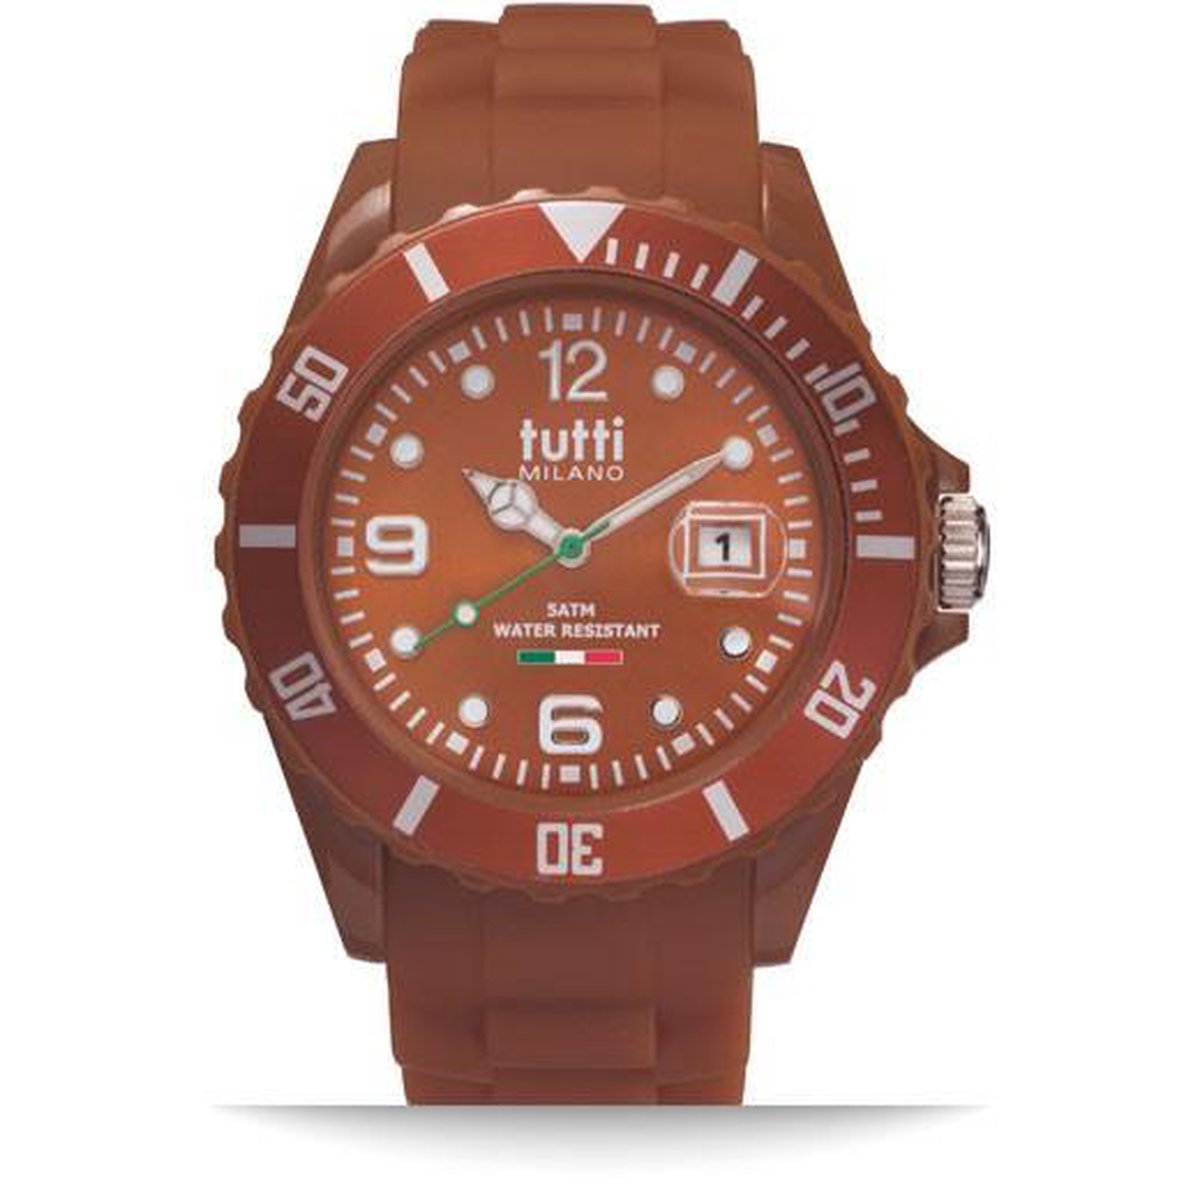 Tutti Milano TM002BR-Horloge - 42.5 mm - Bruin - Collectie Pigmento